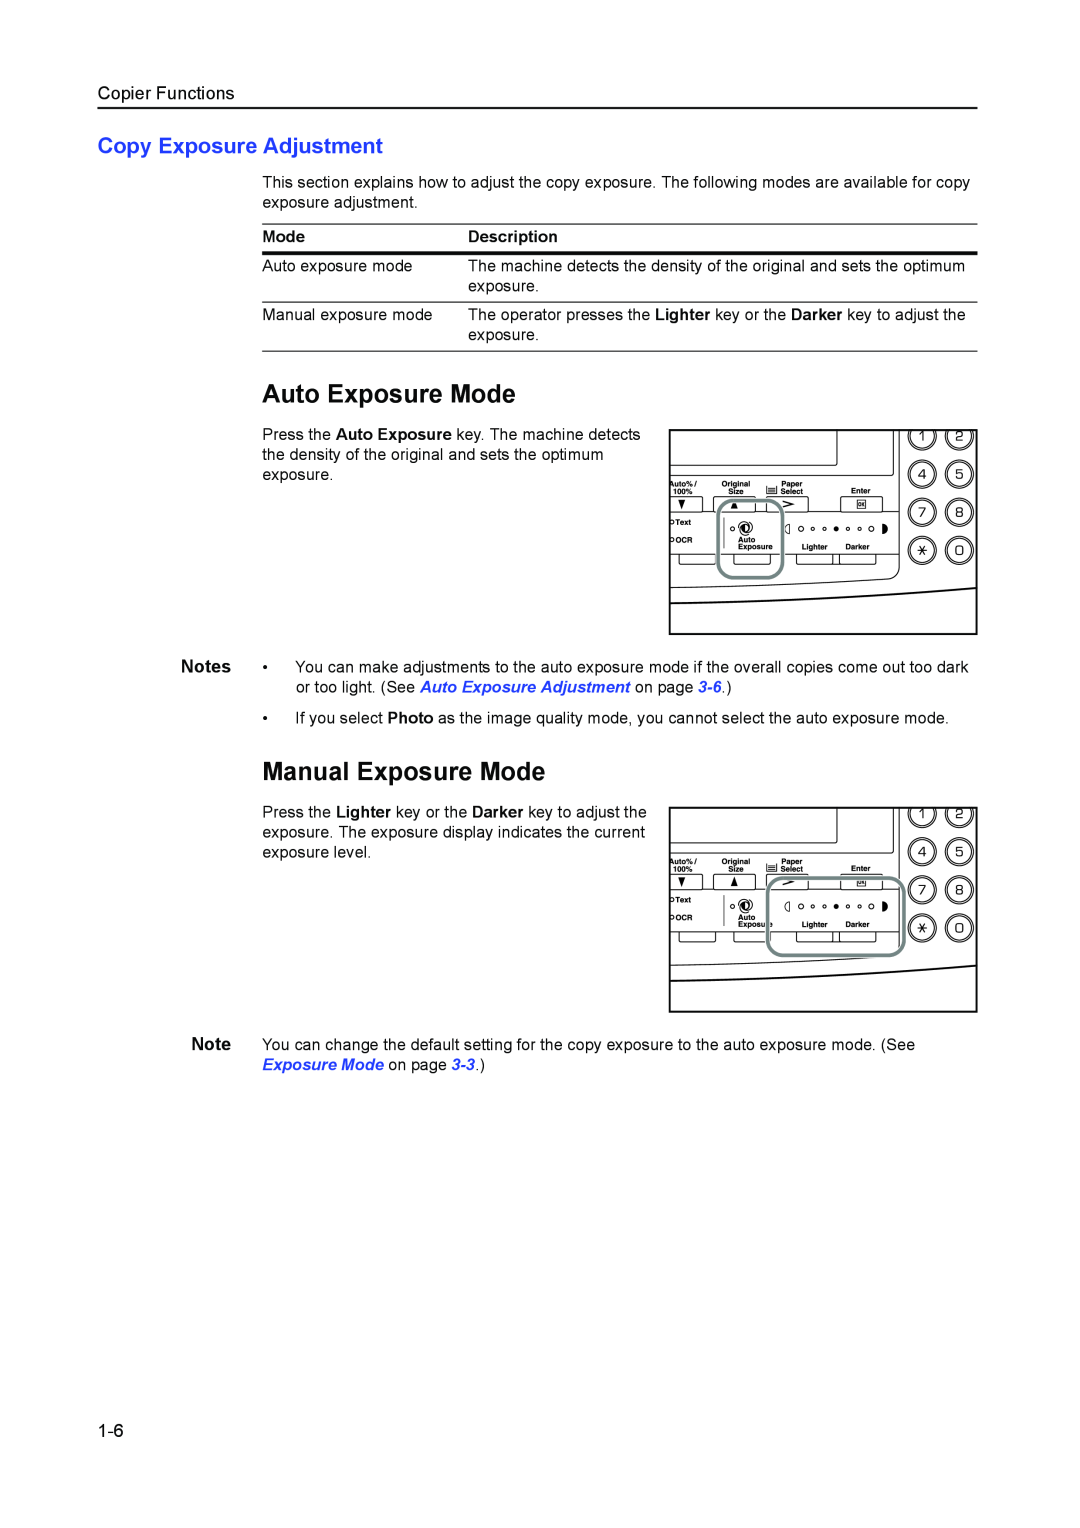 Kyocera 2550, 2050, 1650 manual Auto Exposure Mode, Manual Exposure Mode, Copy Exposure Adjustment, Copier Functions 